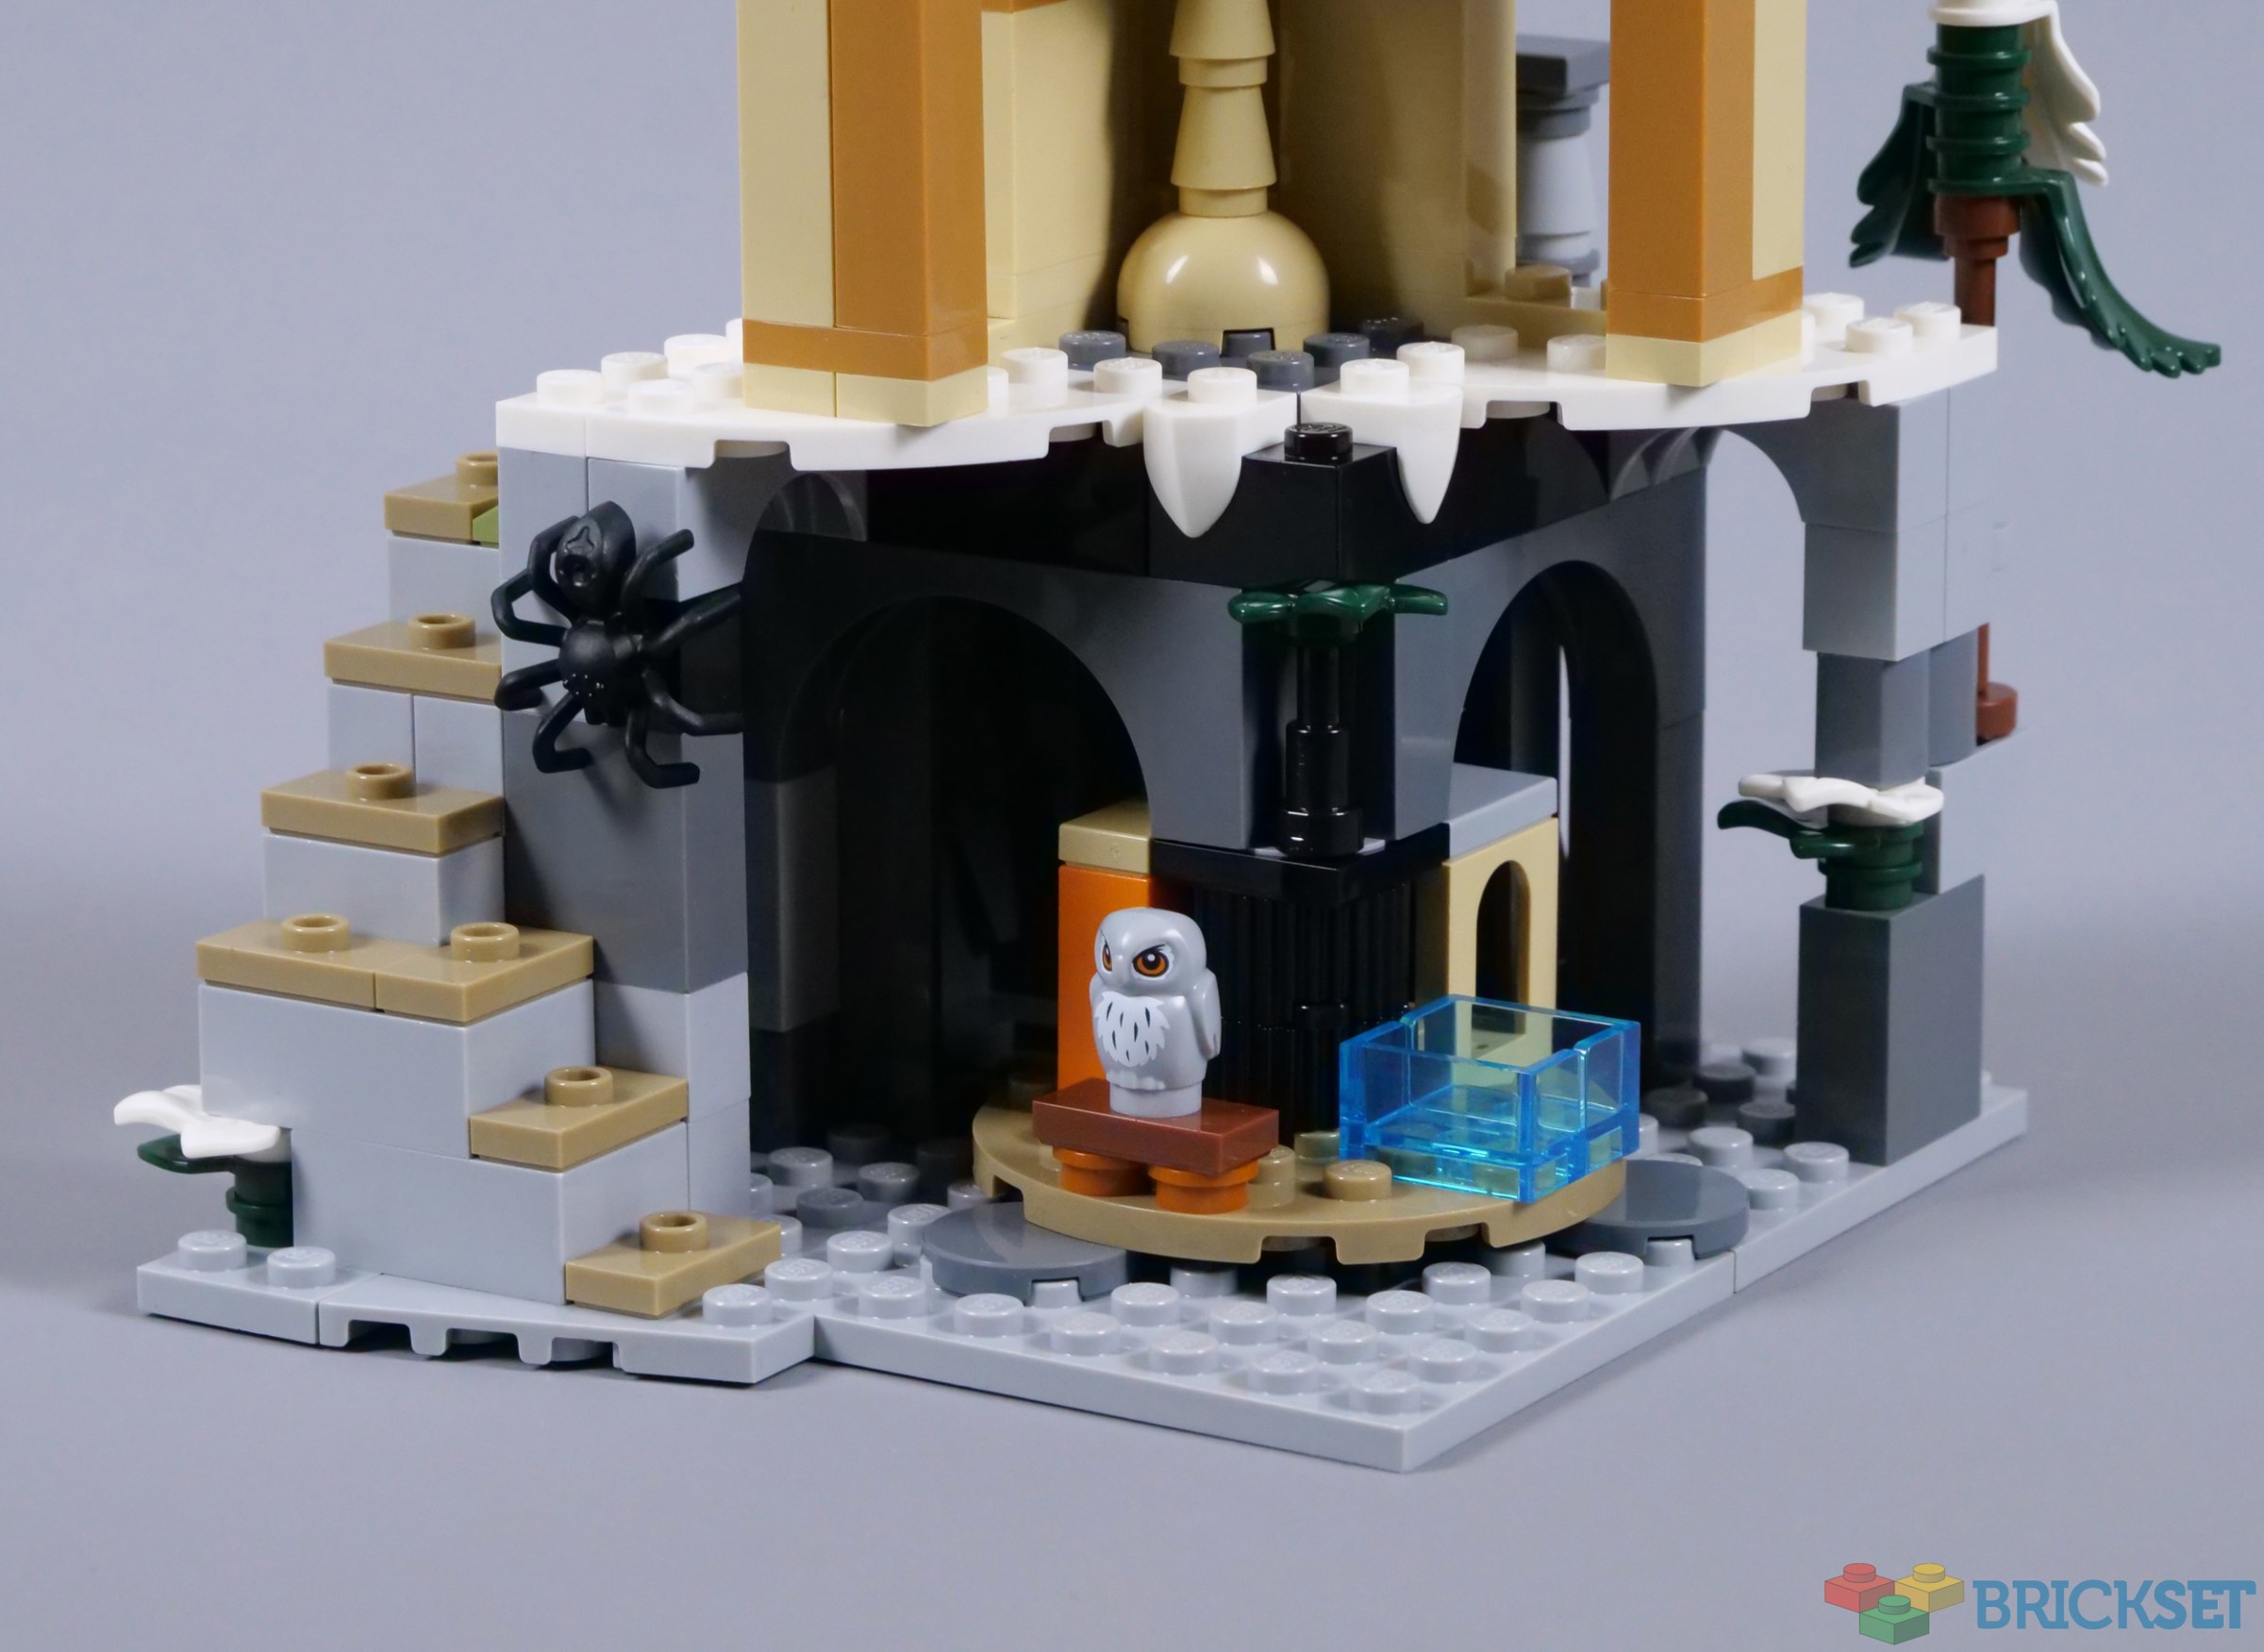 LEGO 76430 Hogwarts Castle Owlery review